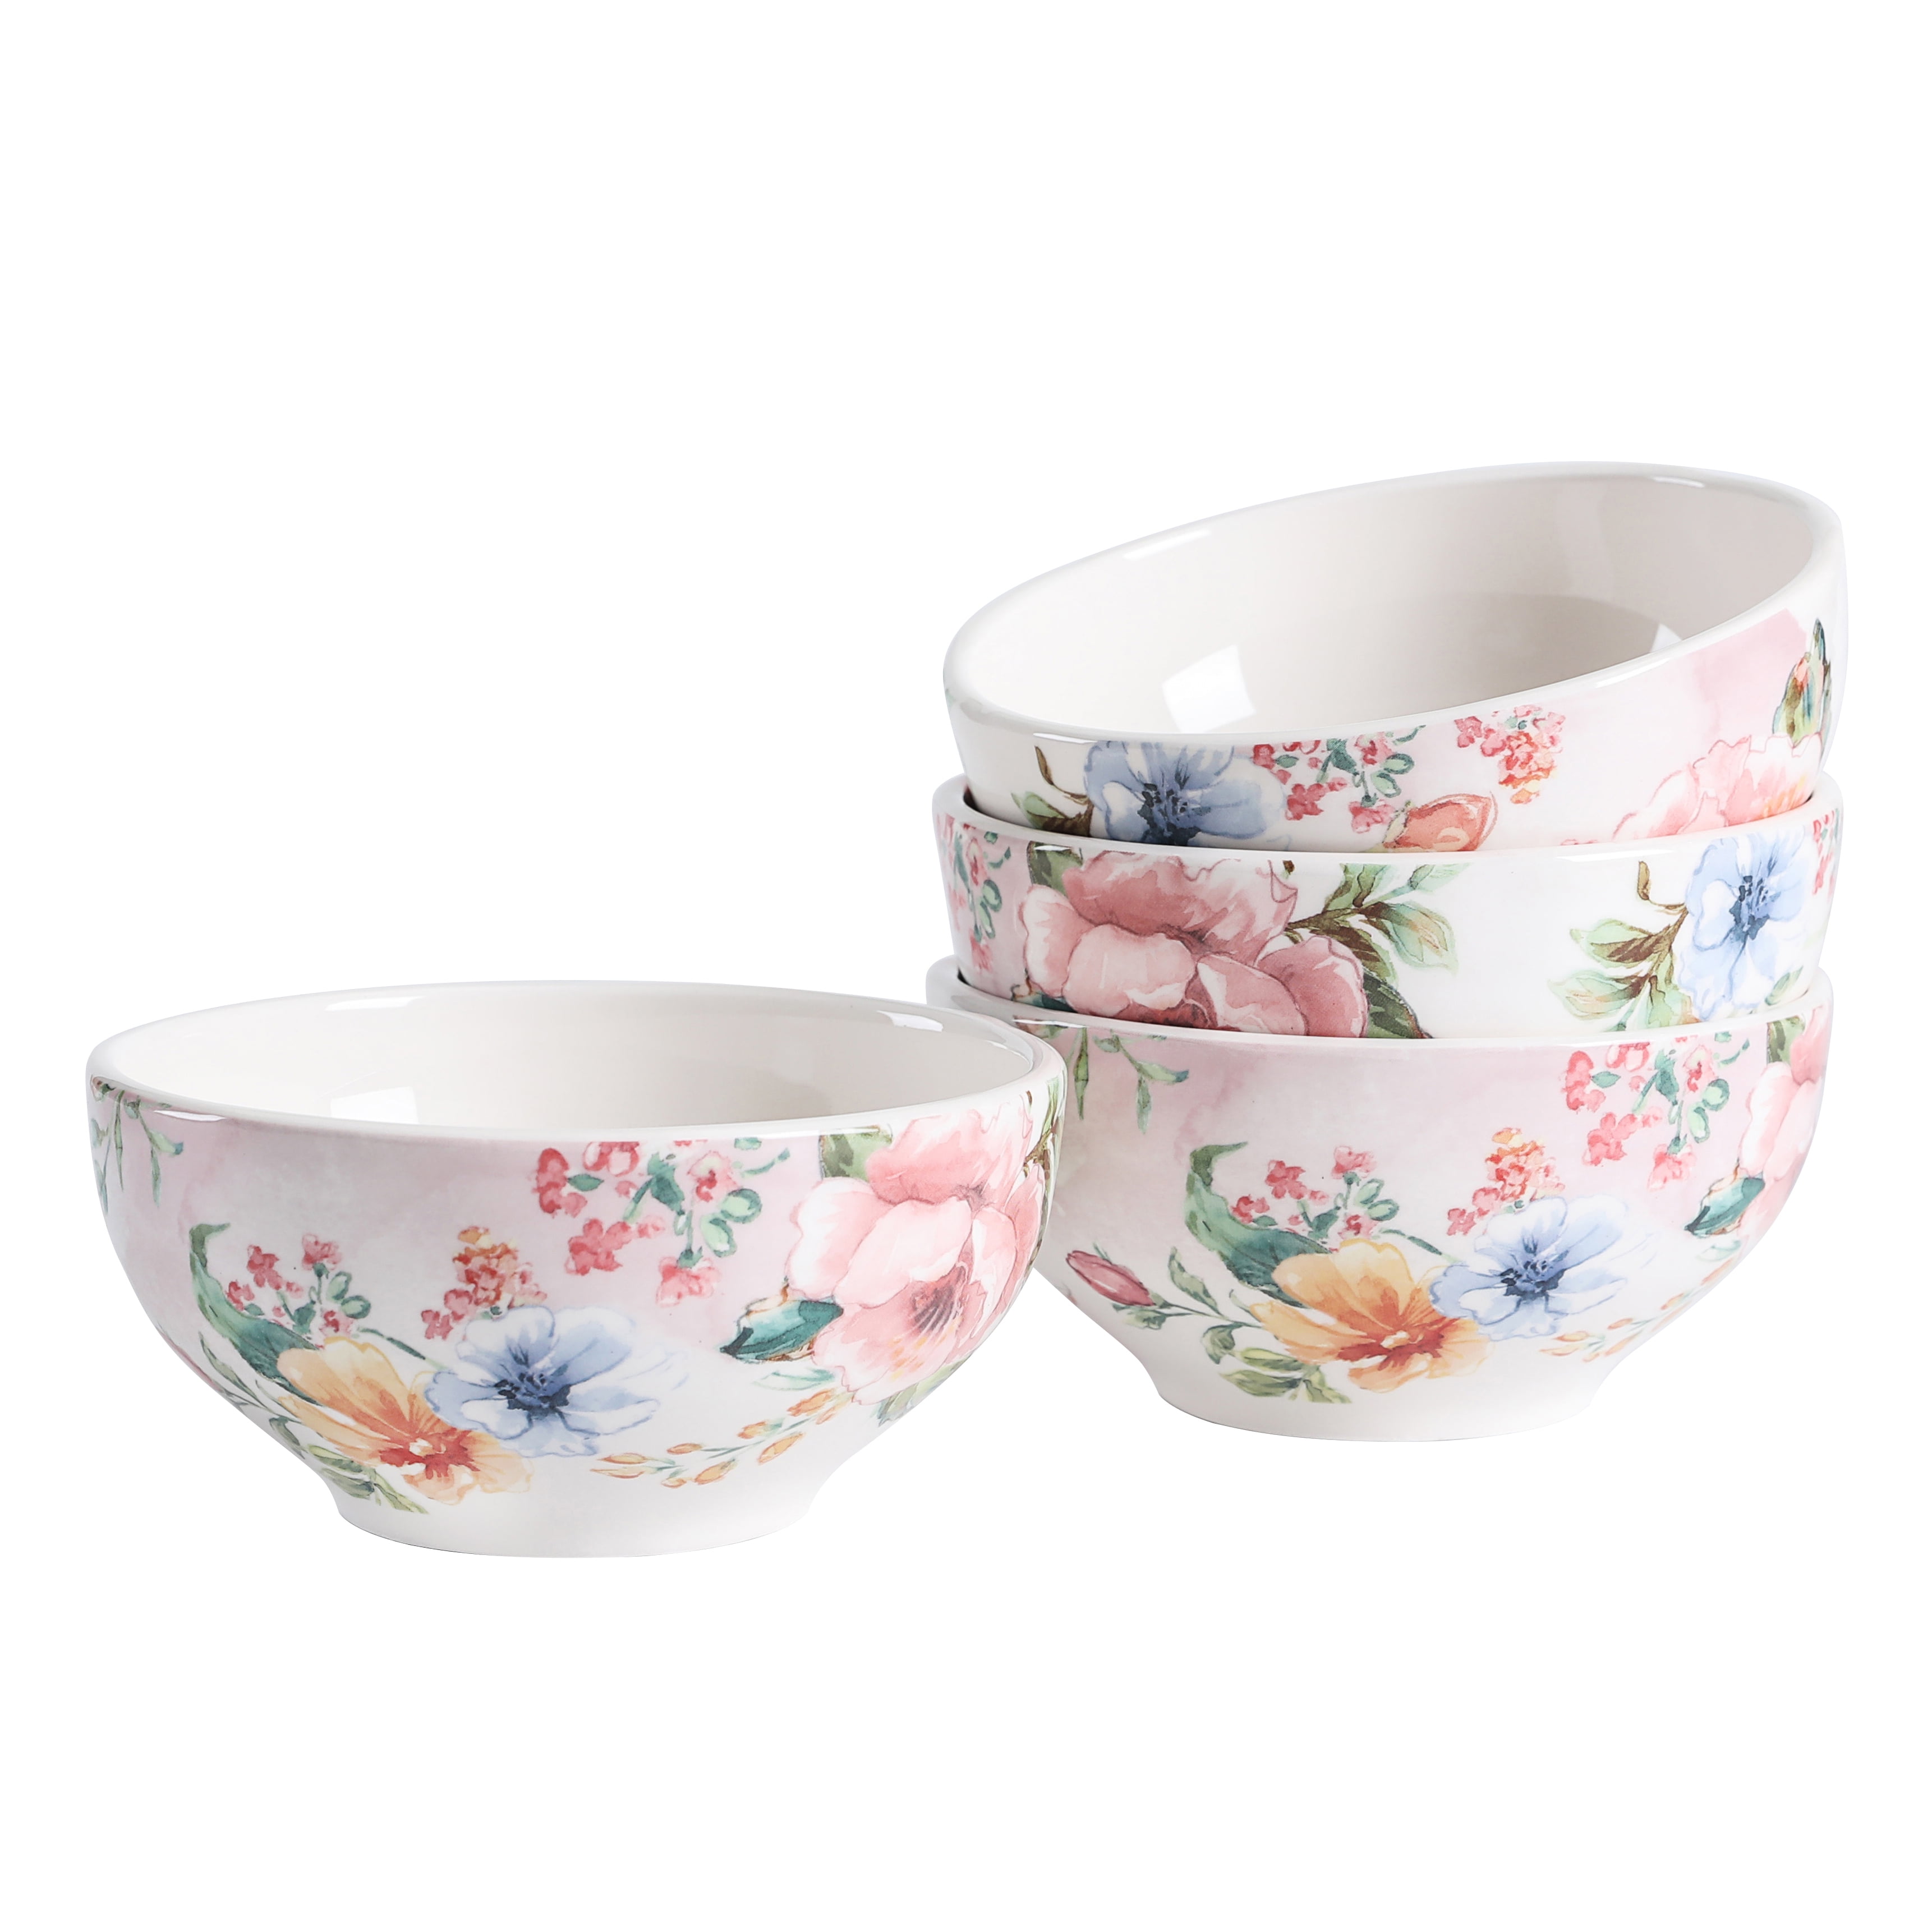 Bico Flower Carnival Ceramic Bowls Set of 4, 26oz, for Pasta 